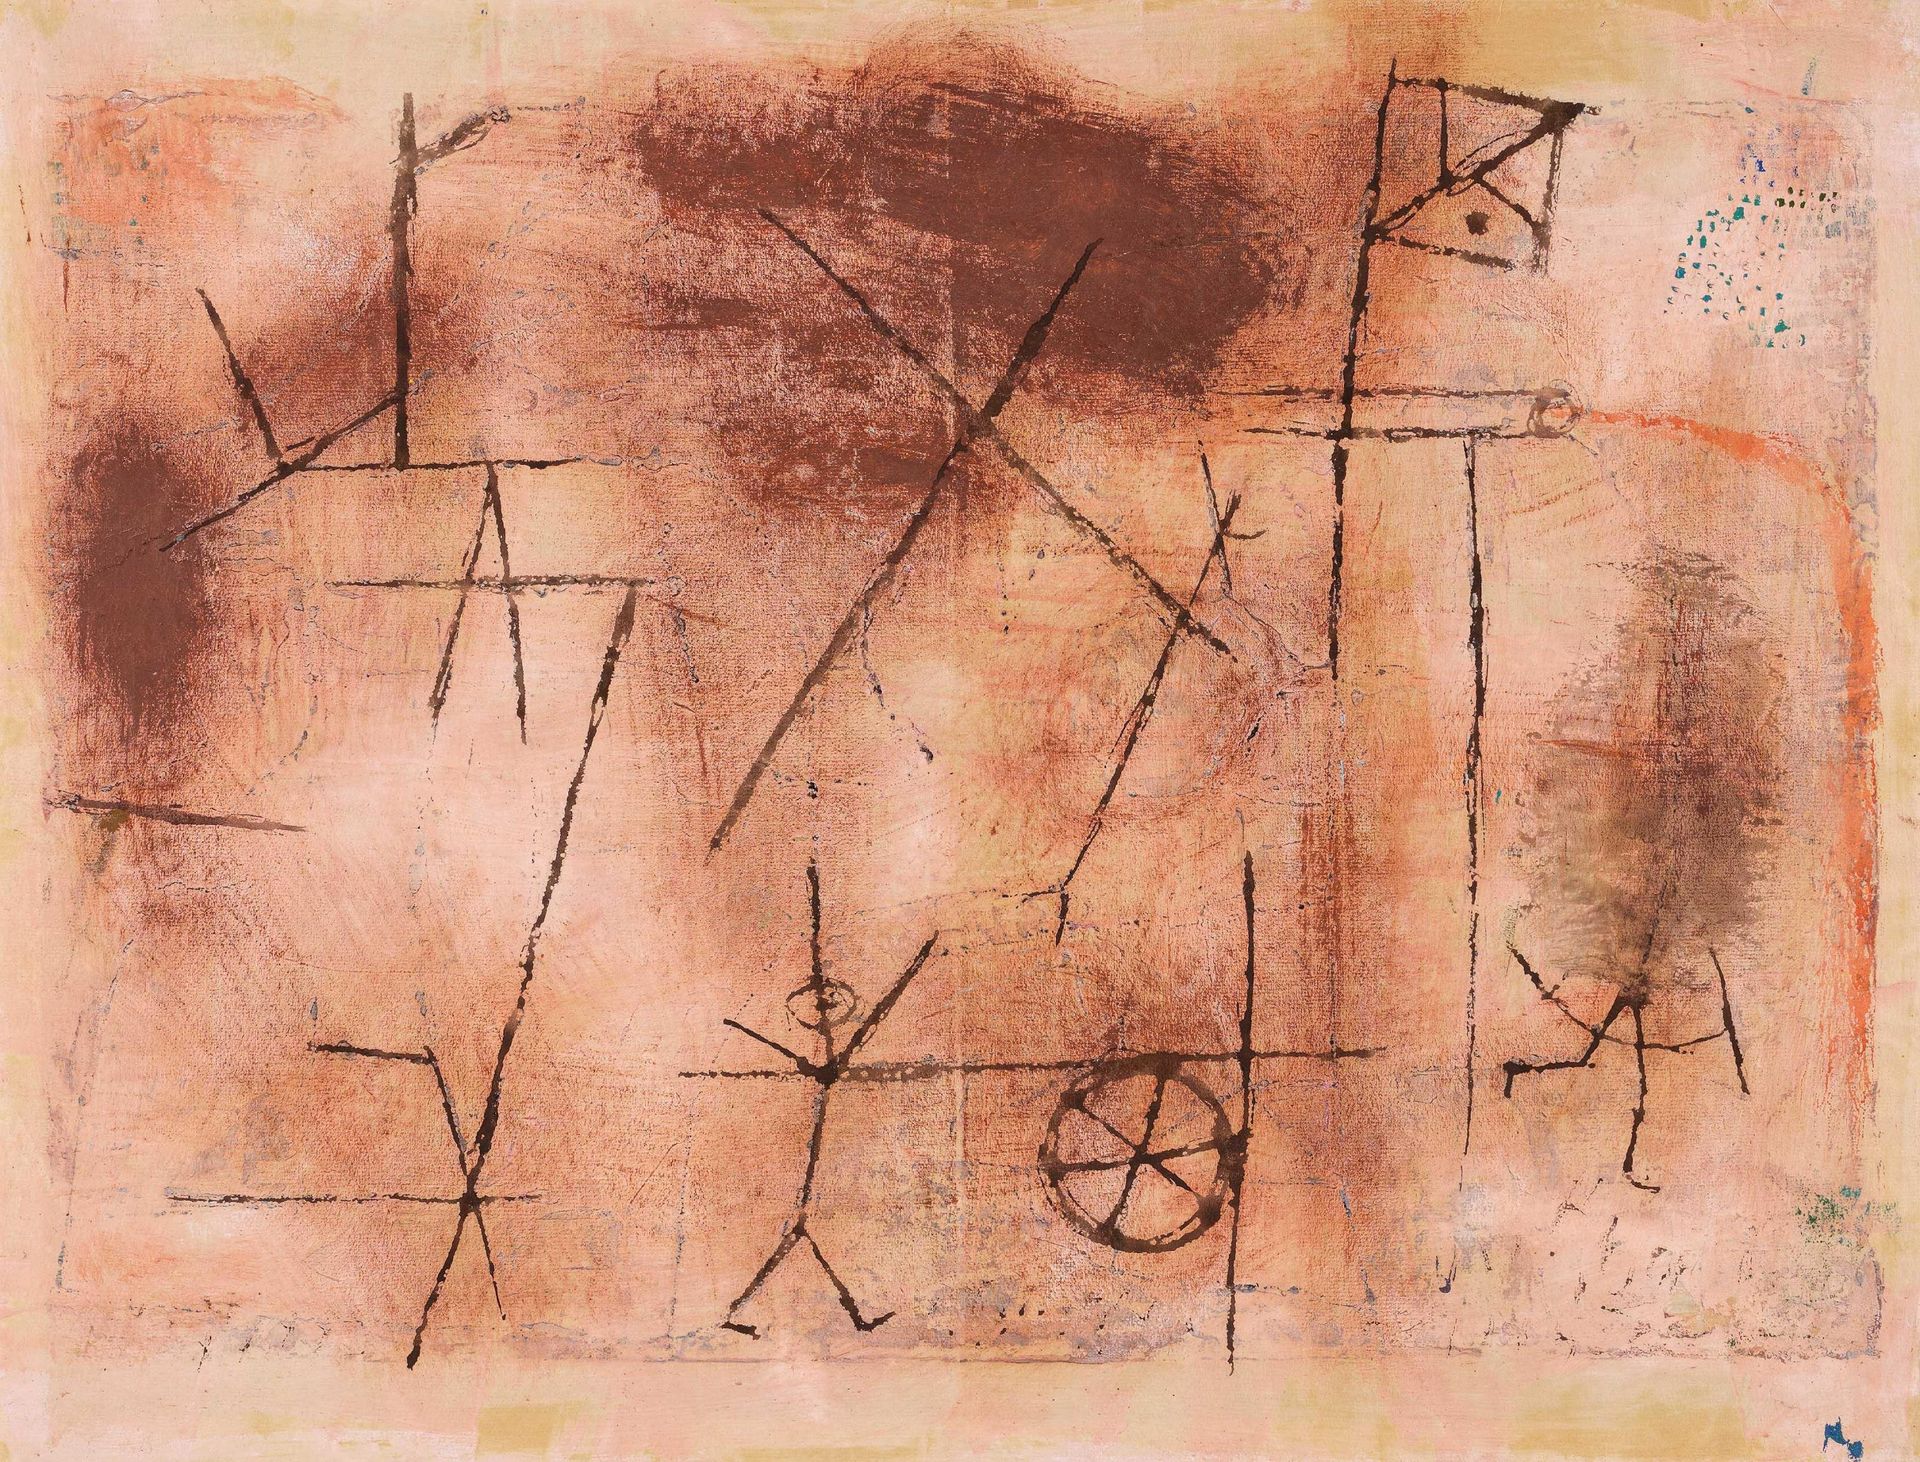 Paul Klee KLEE, PAUL
1879年明兴布赫塞-1940年穆拉尔多/提契诺

标题："Formel eines Krieges"。 
日期：19&hellip;